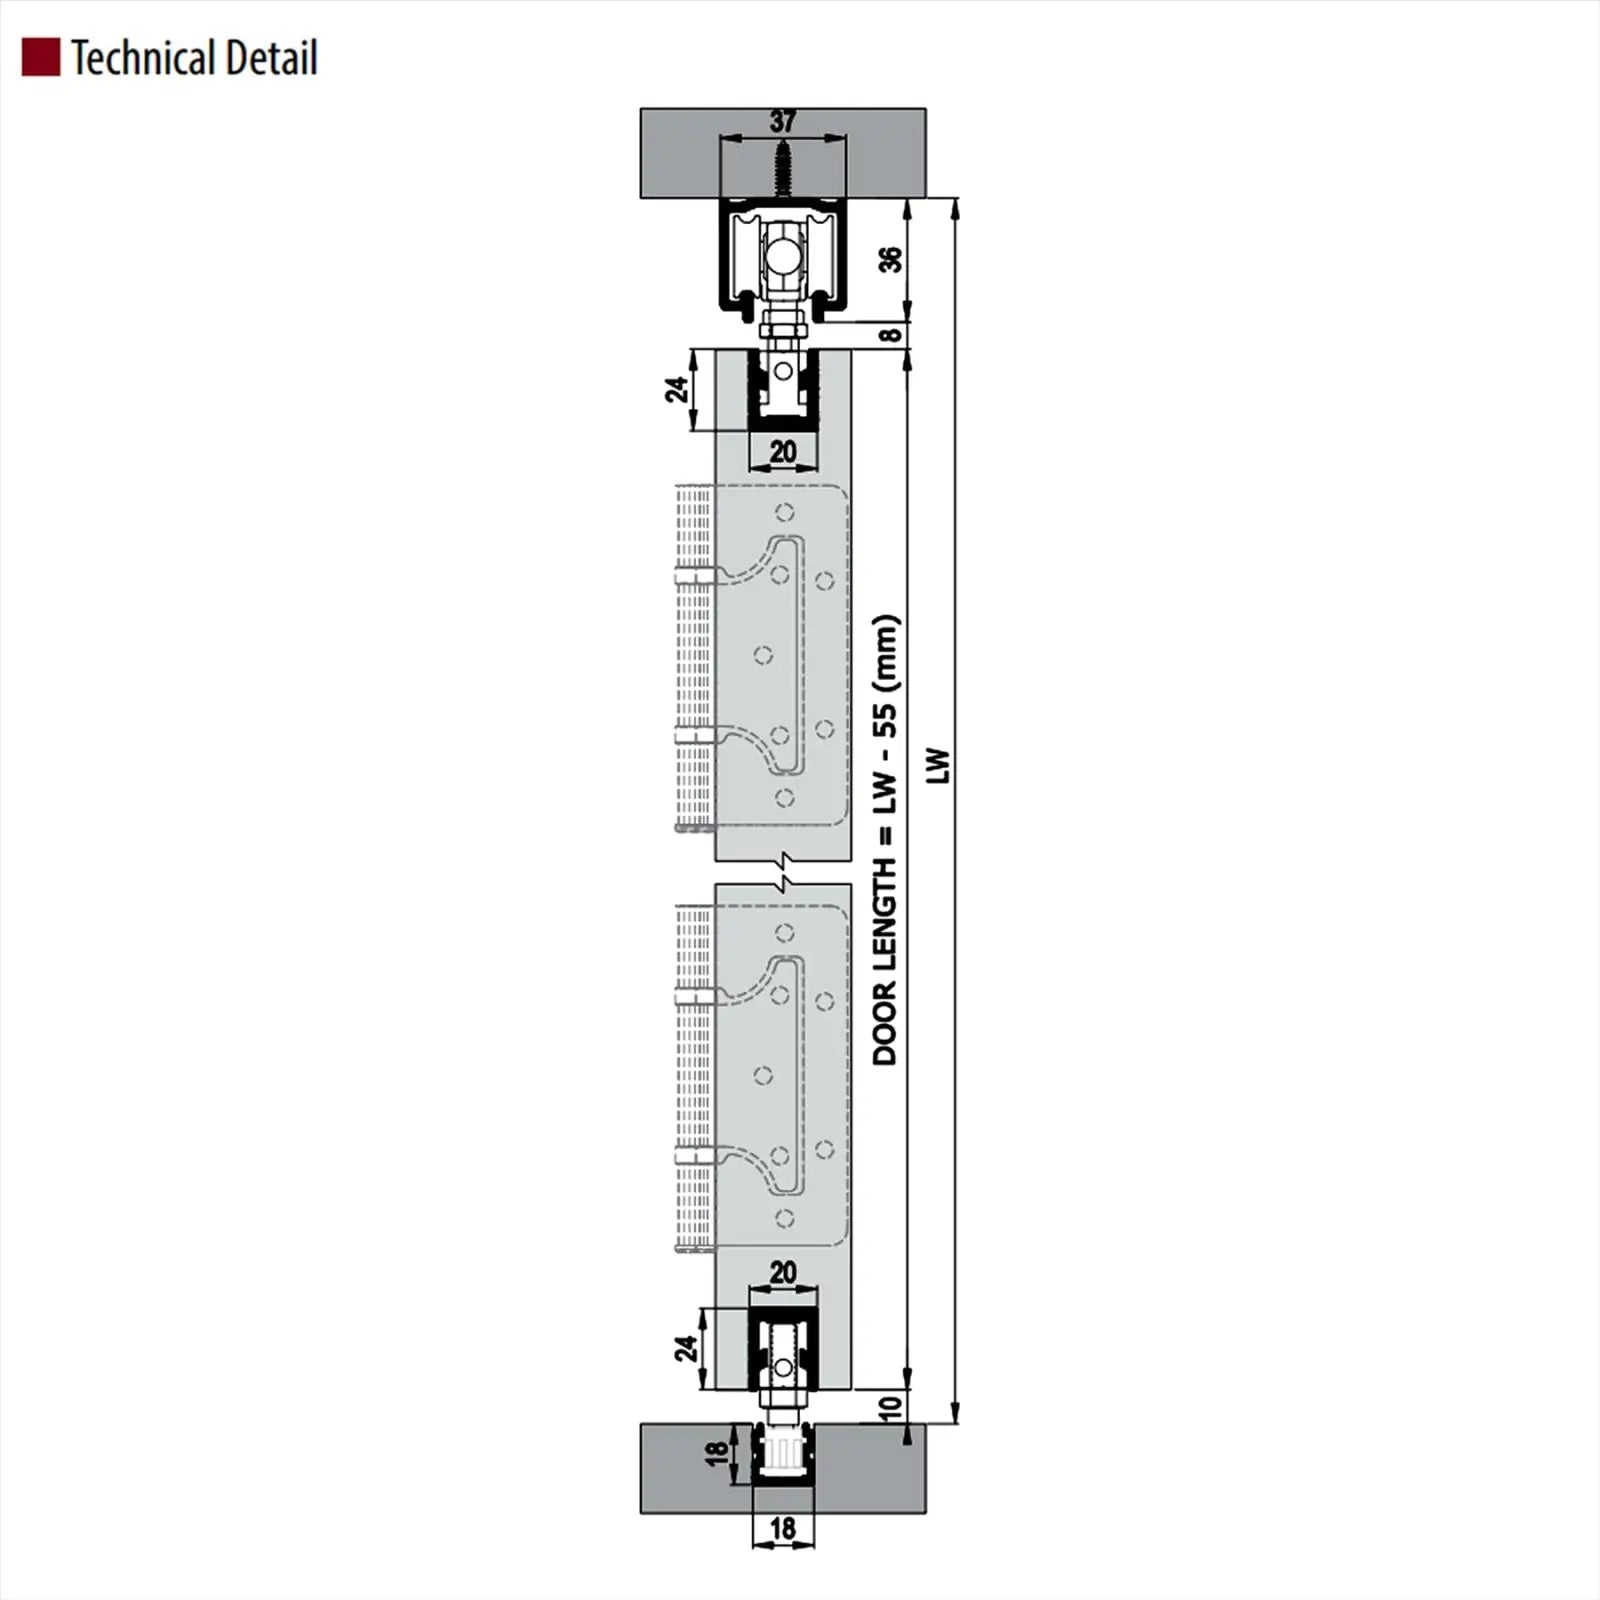 F-Slide Folding Sliding Door Kit - 4 + 1 Door - 3600mm Track - Decor And Decor